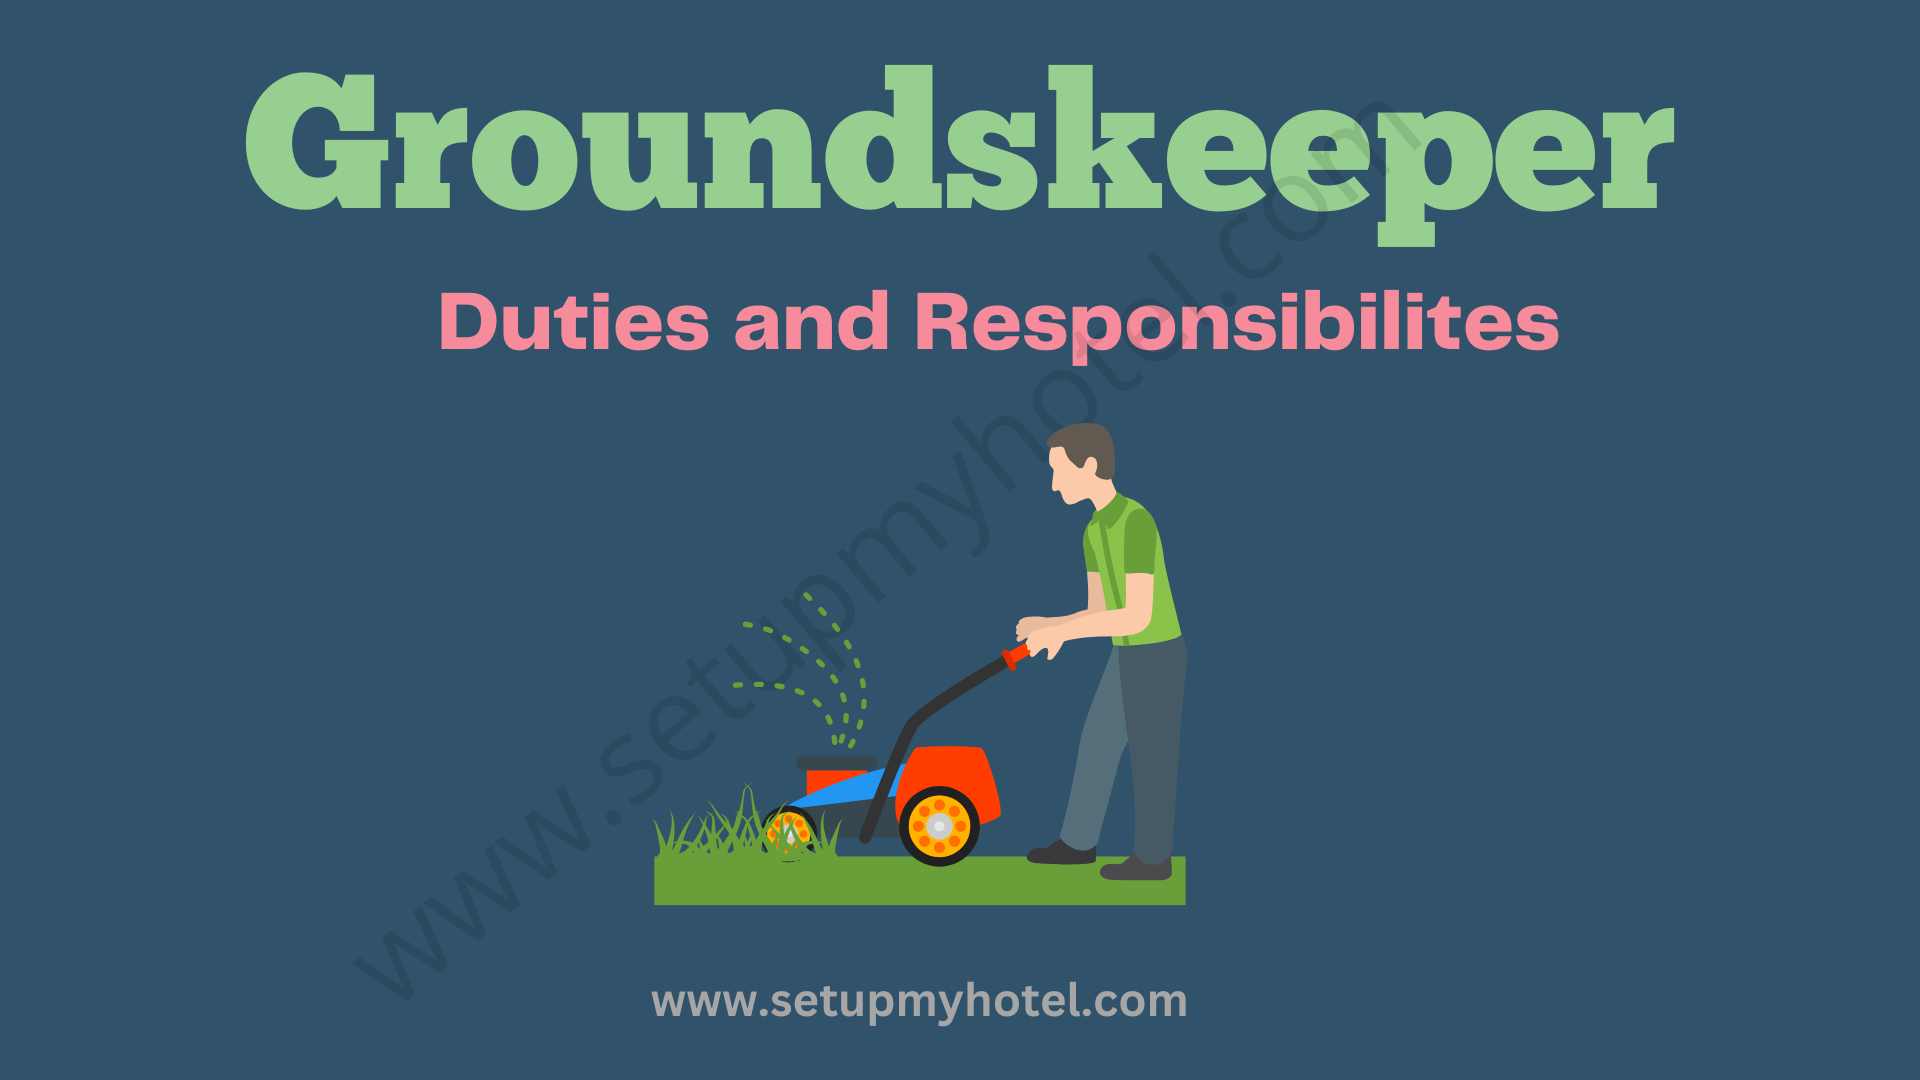 Groundskeeper Duties and Responsibilities 